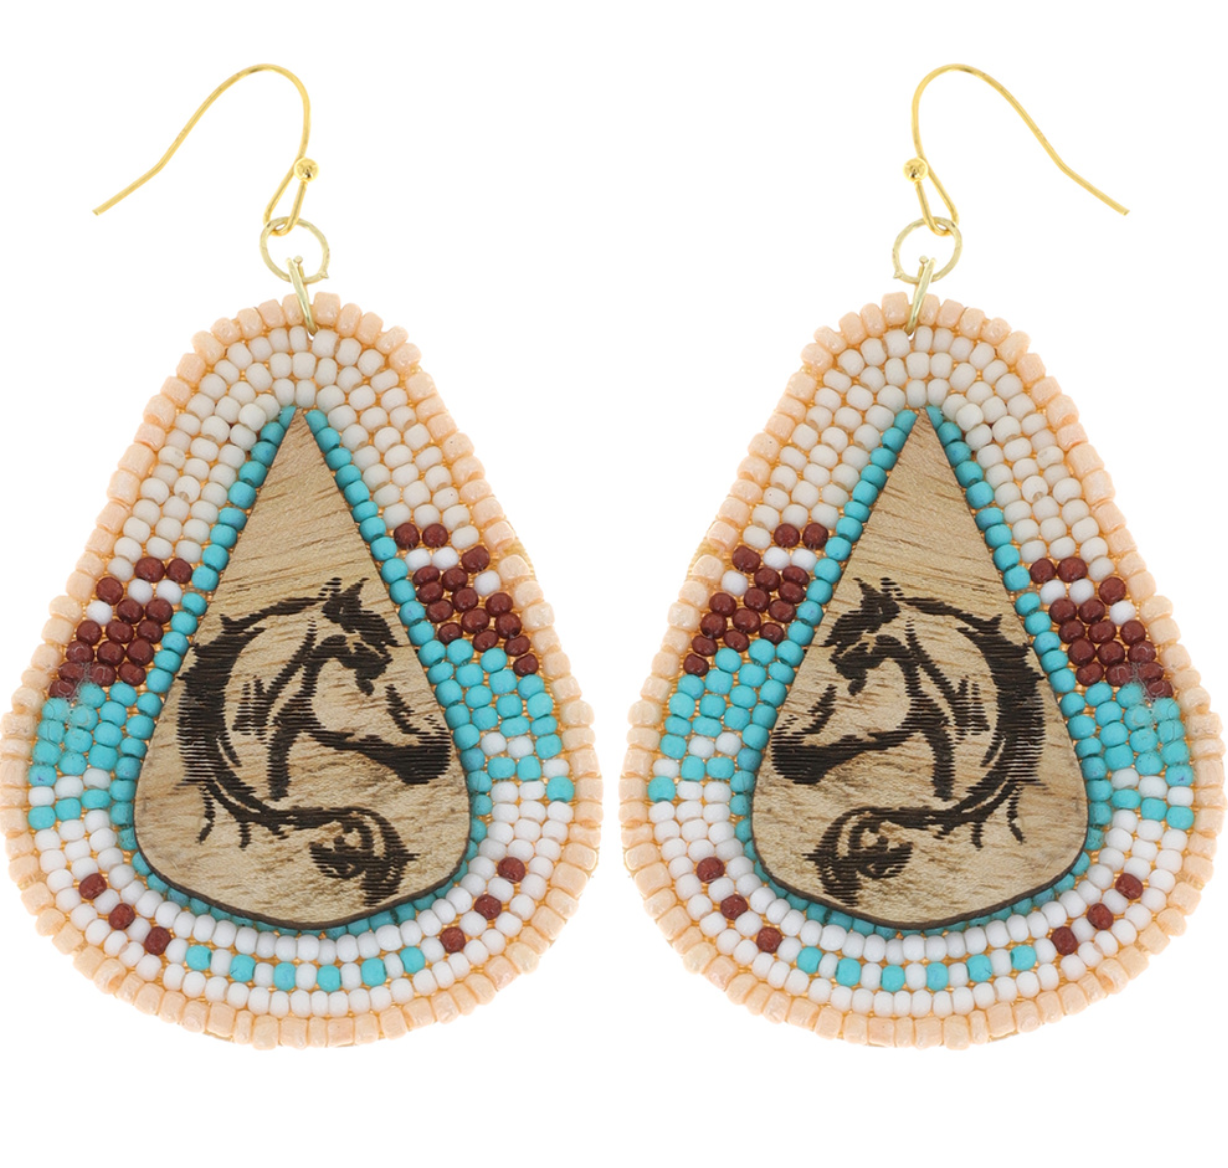 Western Seed Beed & Wood Horse Earrings - Ivory/Turquoise